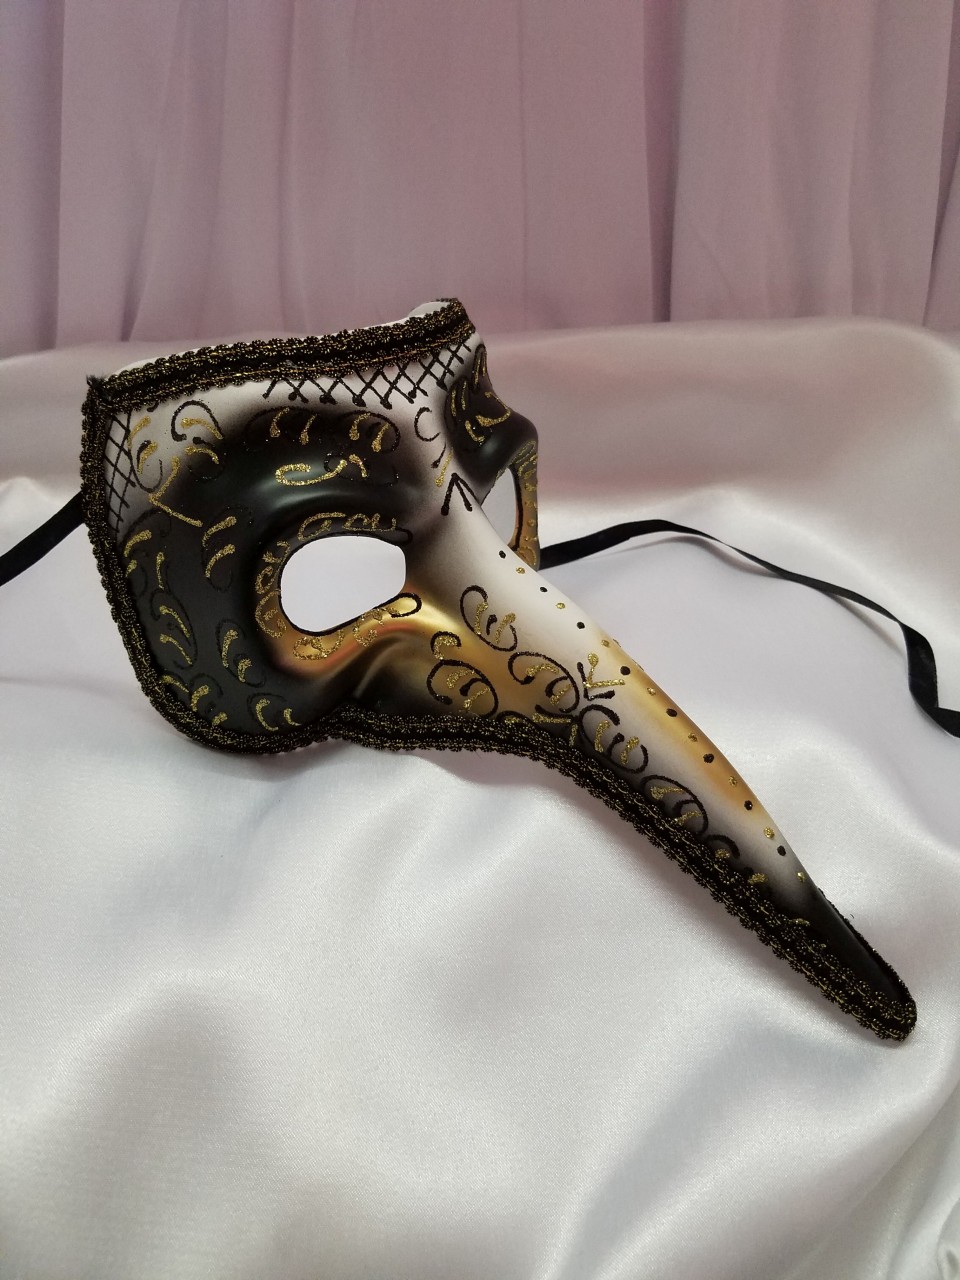 Long Nose Gold and Black Masquerade Mask